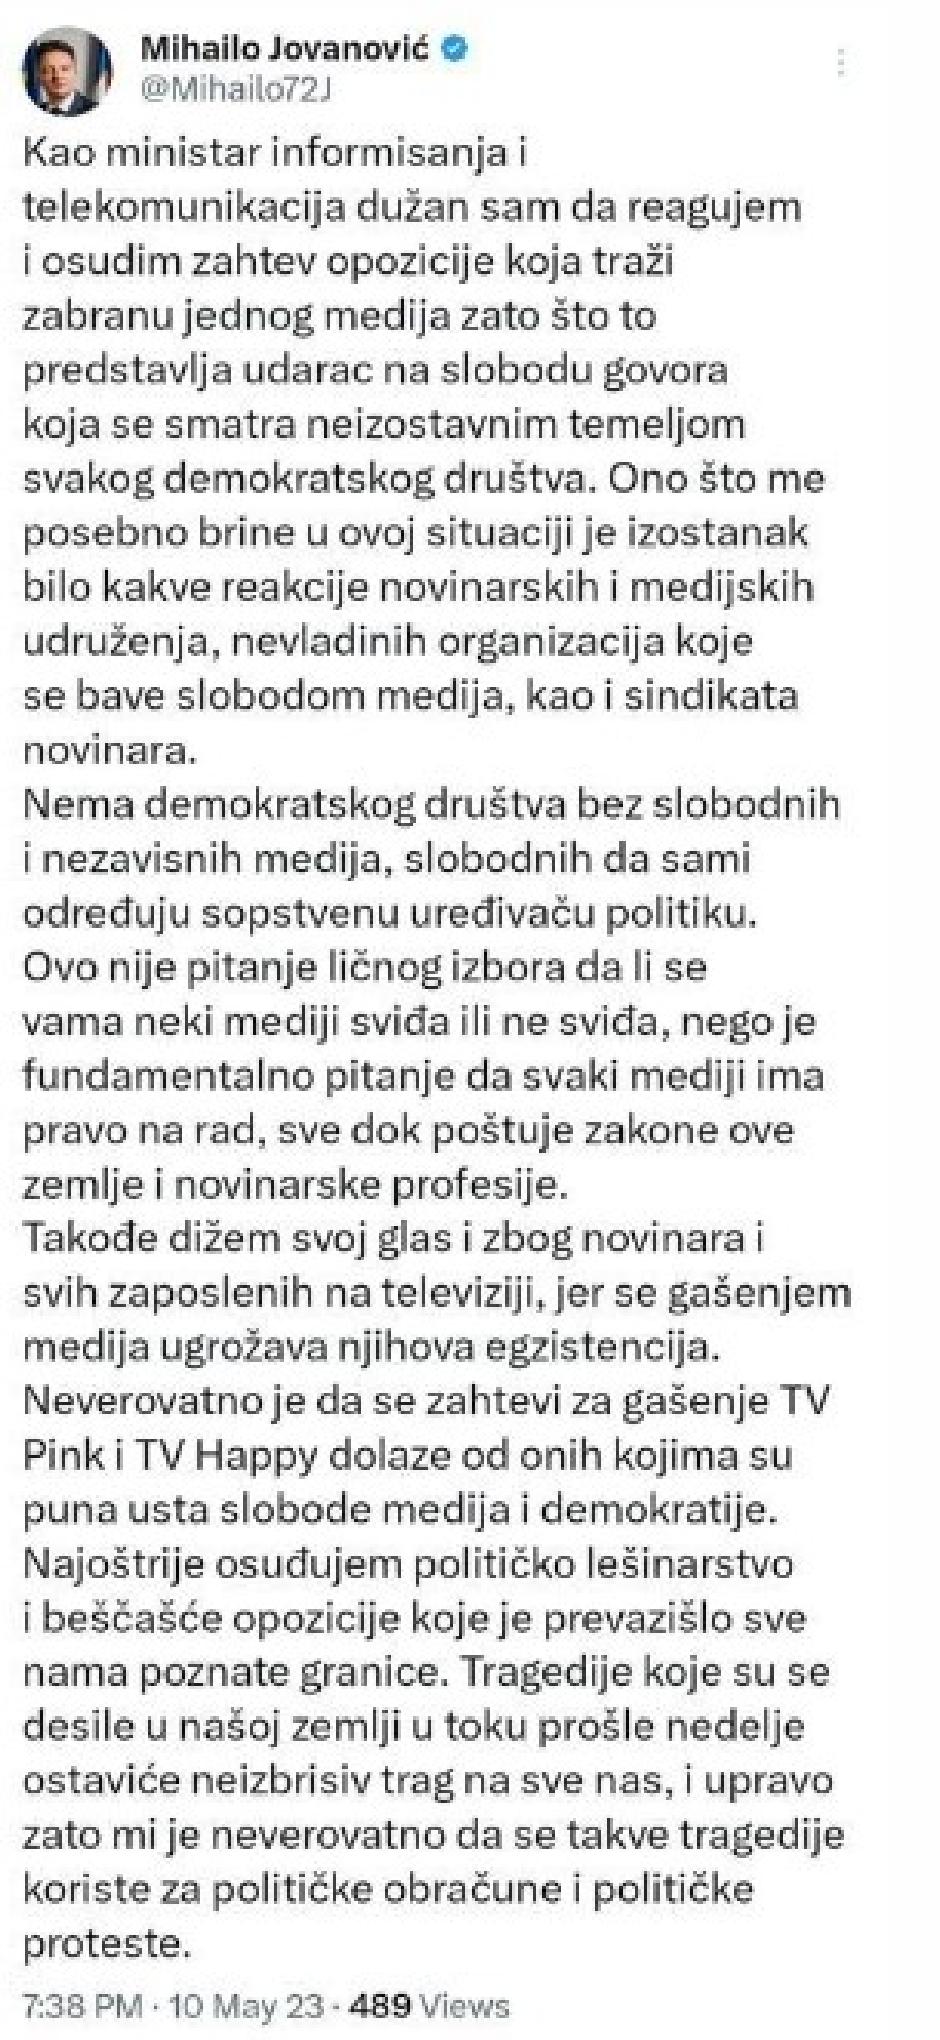 Objava ministra Mihaila Jovanovića FOTO: Printscreen